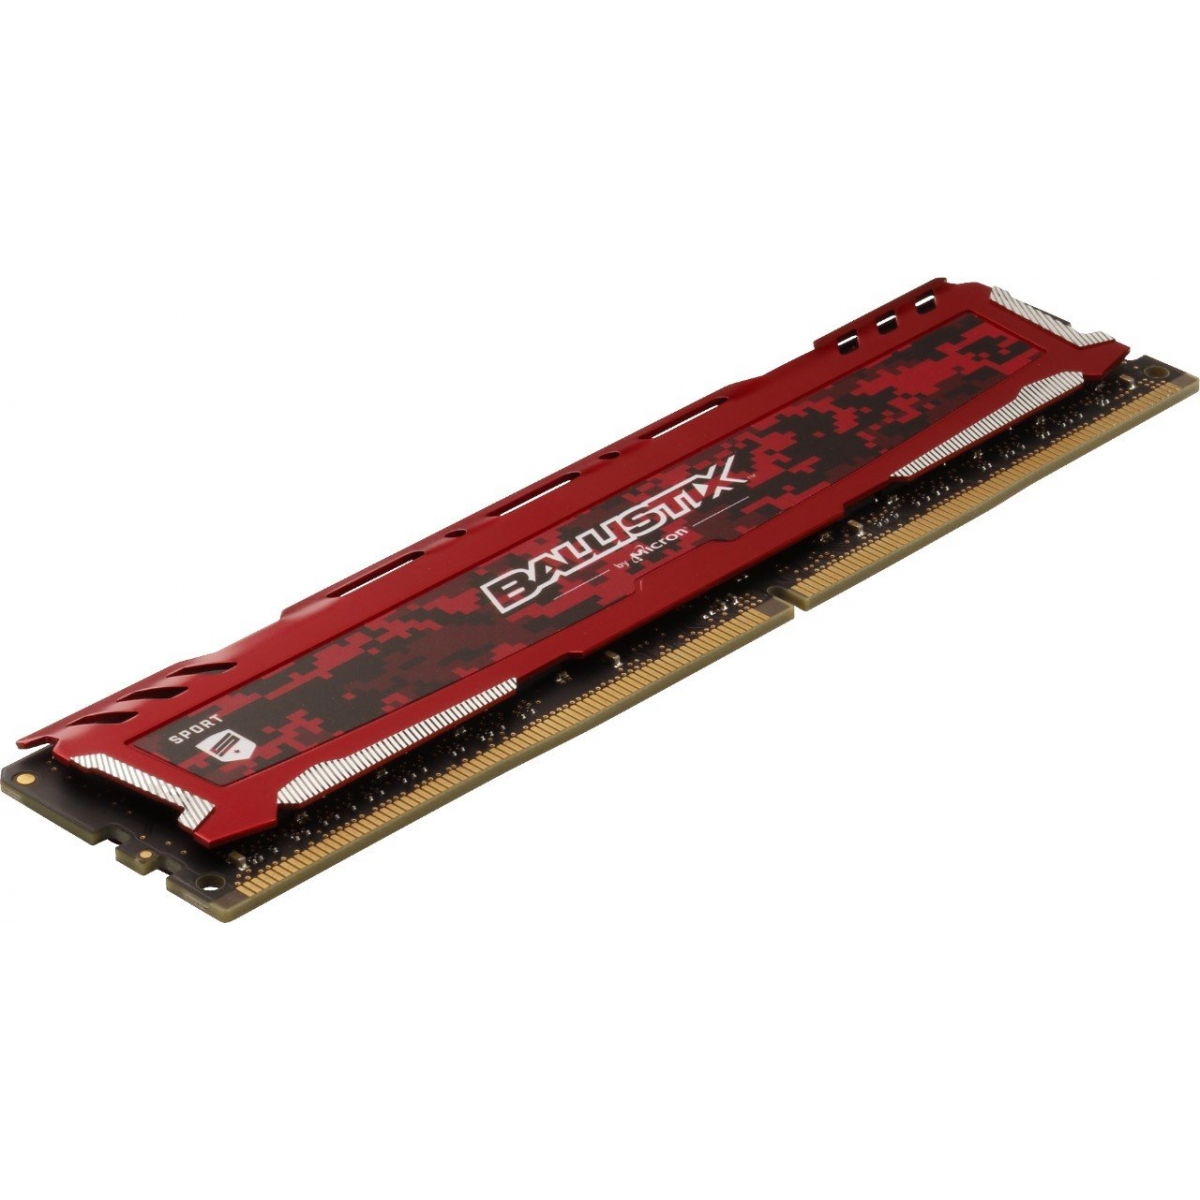 Memória DDR4 Crucial Ballistix Sport Lt, 16GB (2x8GB) 3200MHz, Red, BLS2K8G4D32AESEK